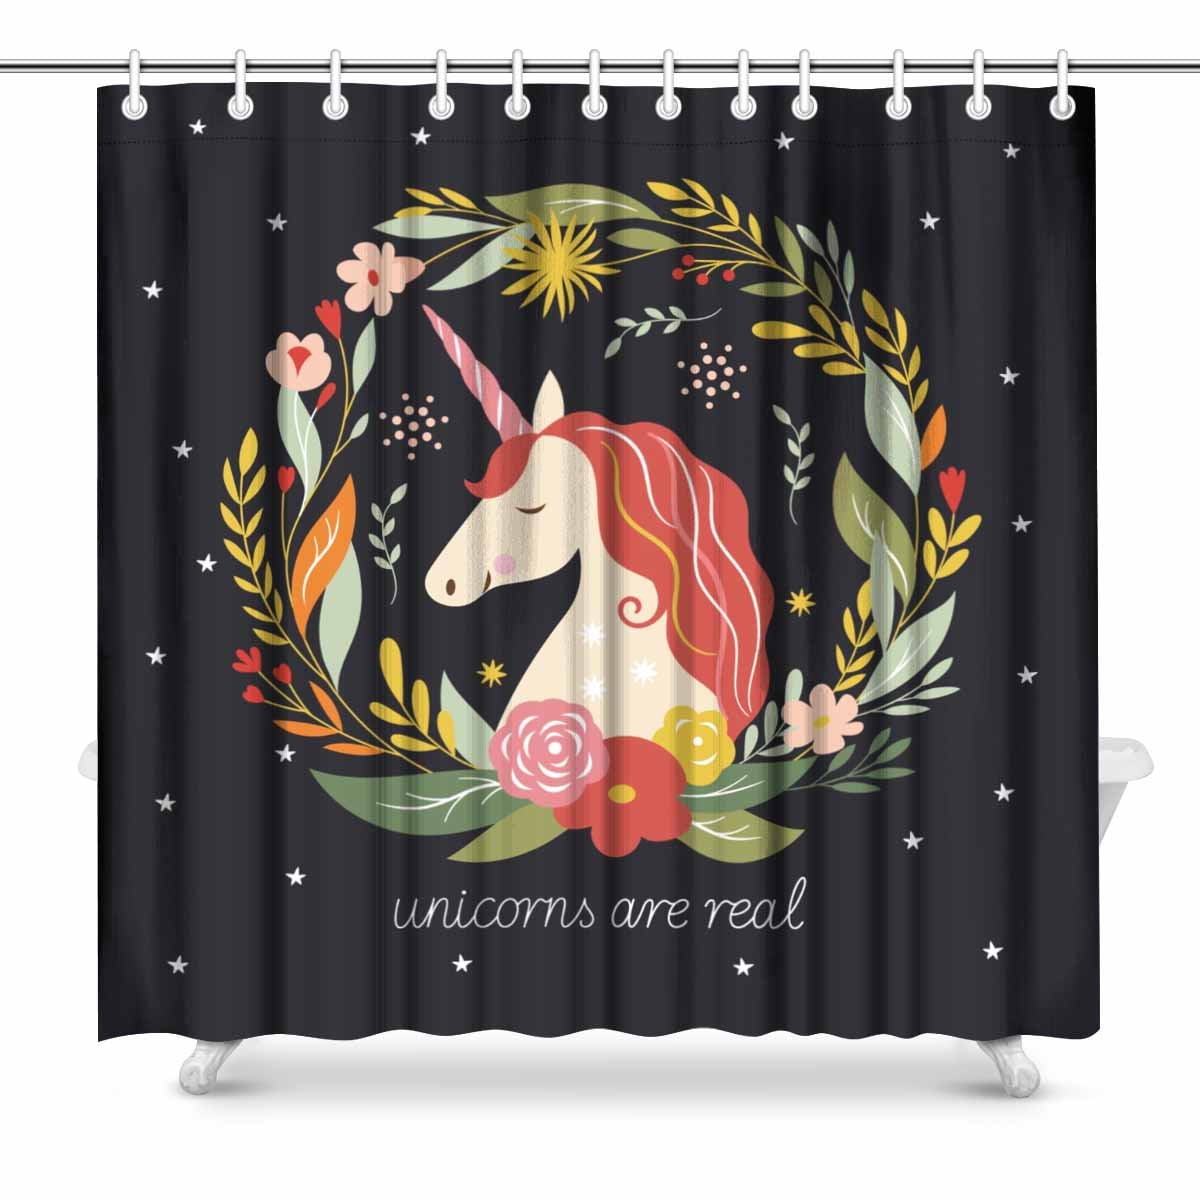 Pop Hello Fall Autumn Unicorn Bathroom Decor Shower Curtain Set 66x72 Inch